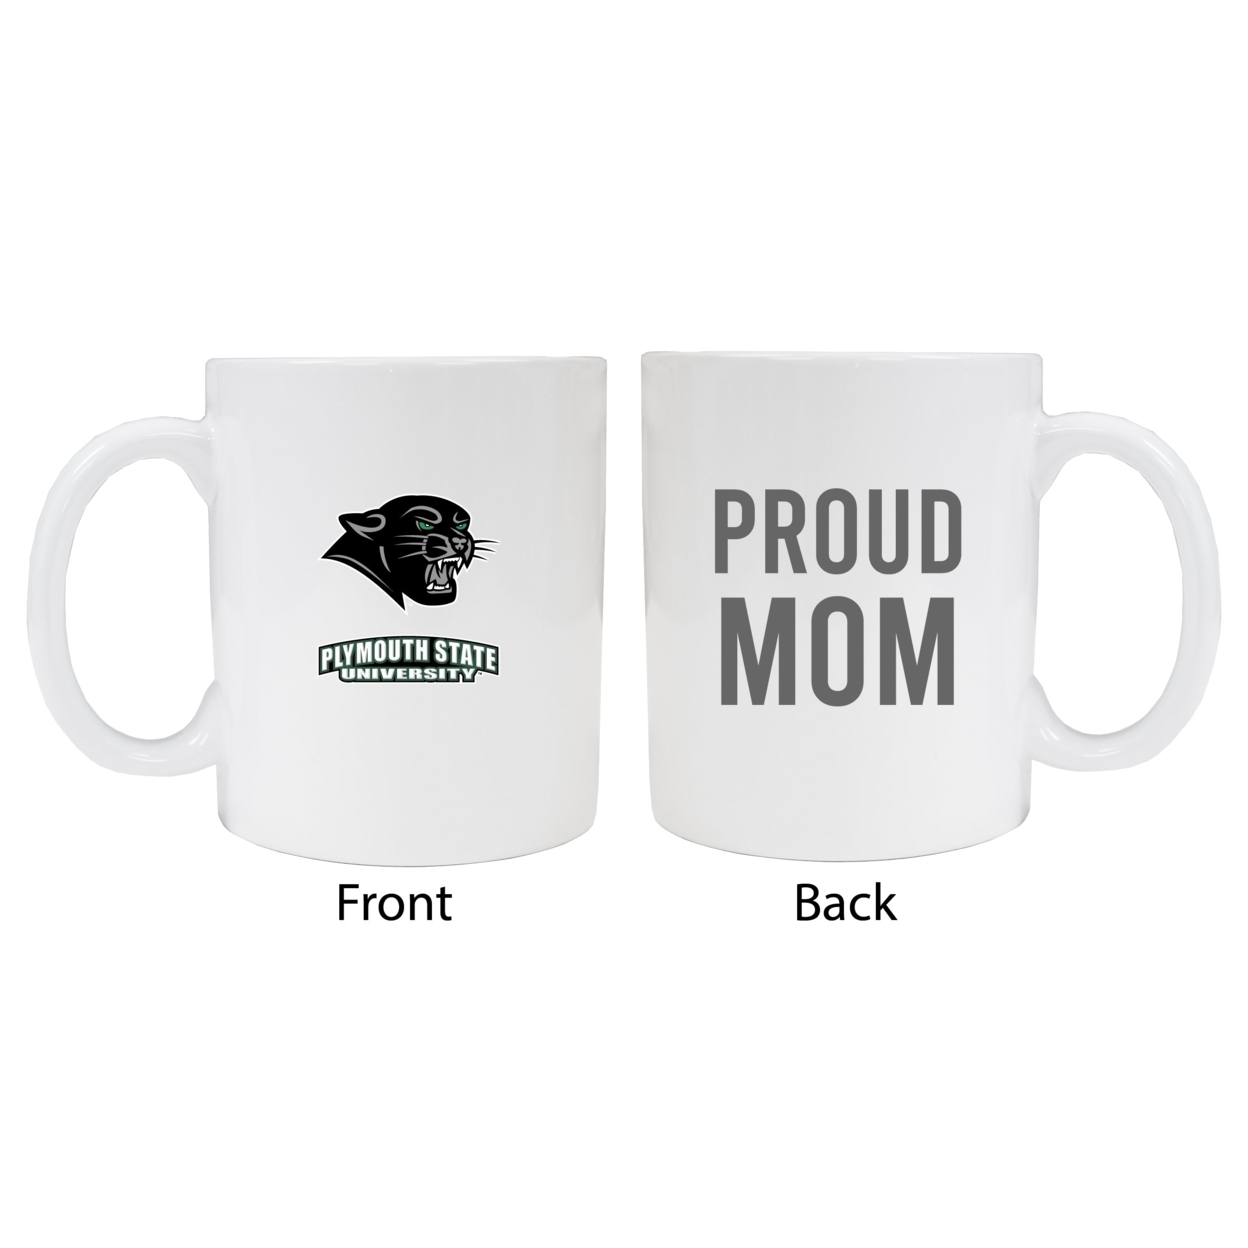 Plymouth State University Proud Mom White Ceramic Coffee Mug - White (2 Pack)